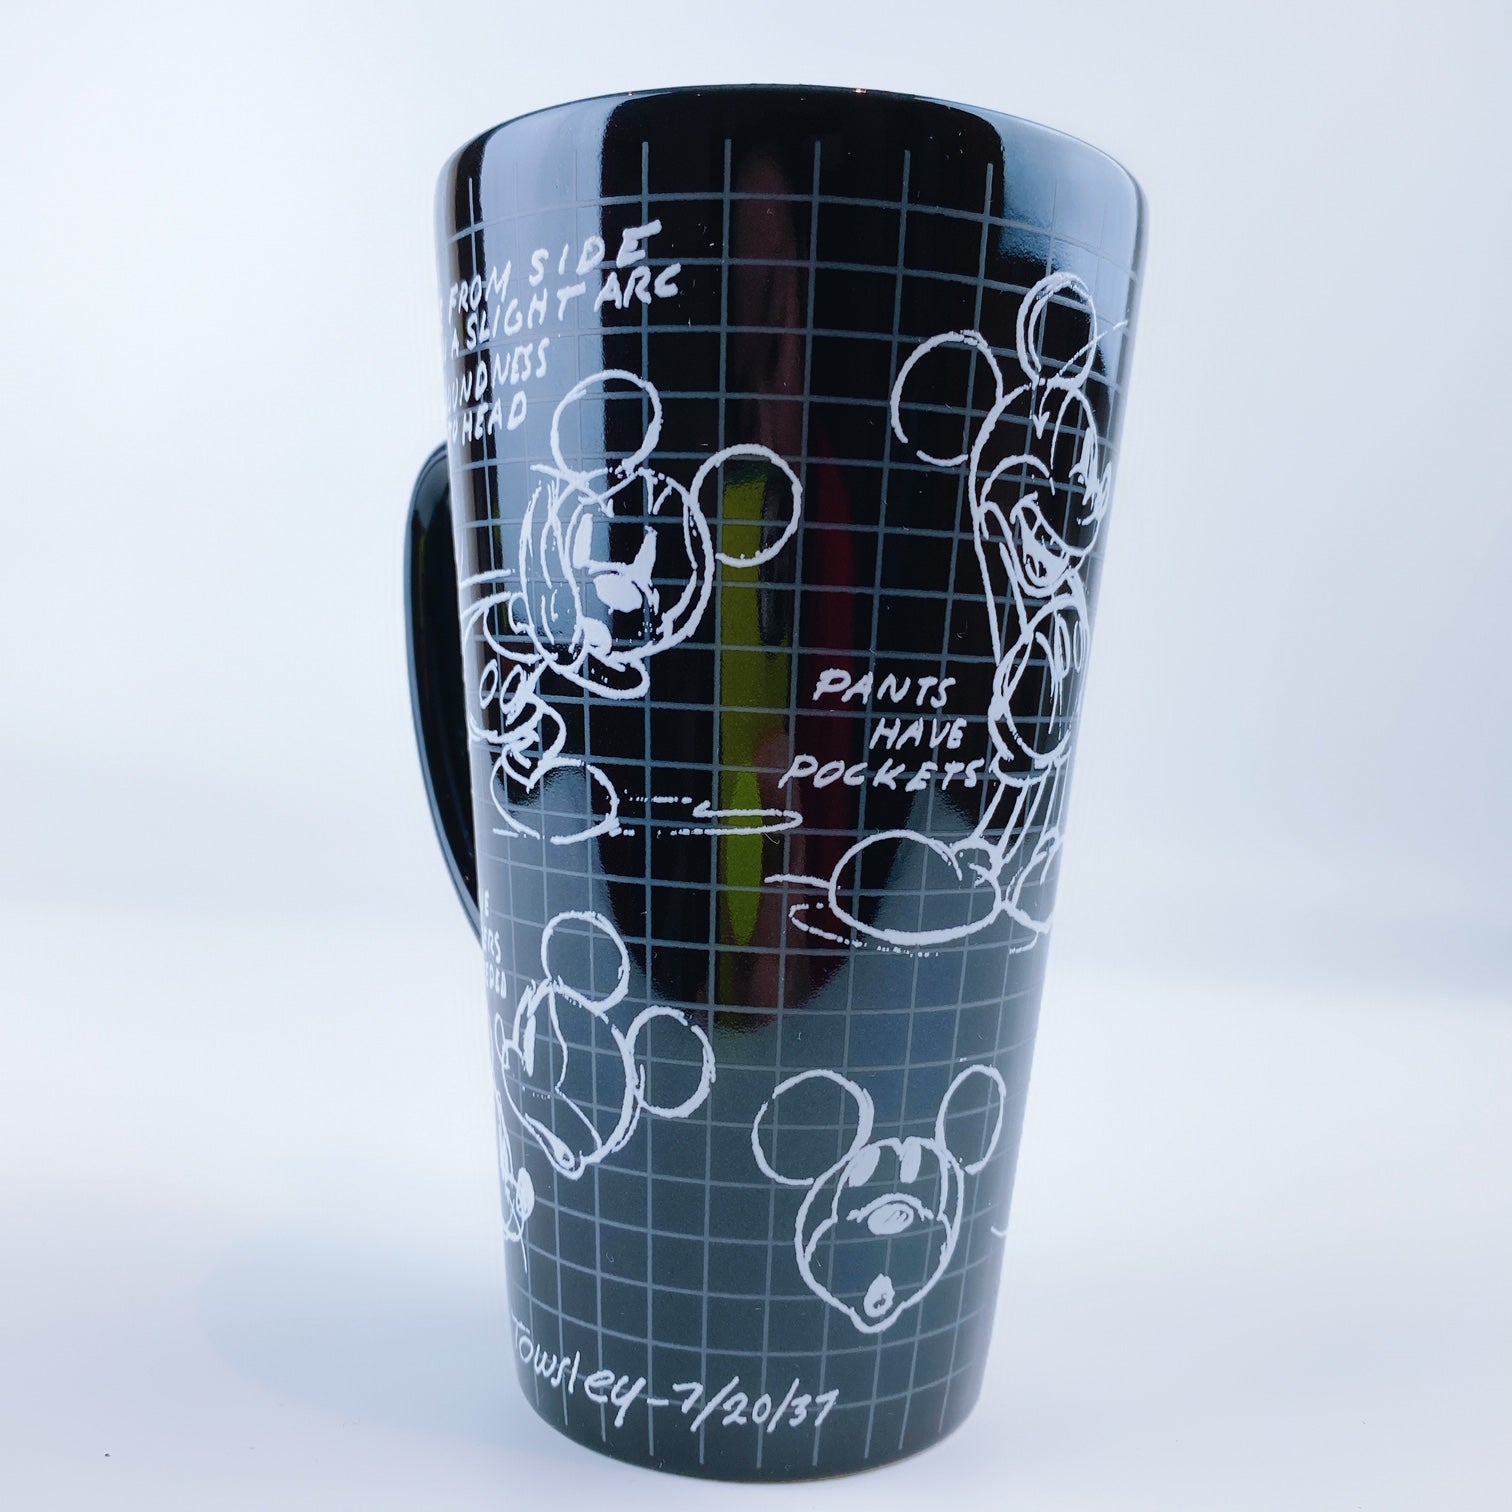 Disney Mickey Mouse Thumbs-Up Glass Coffee Mug | Holds 18 Ounces